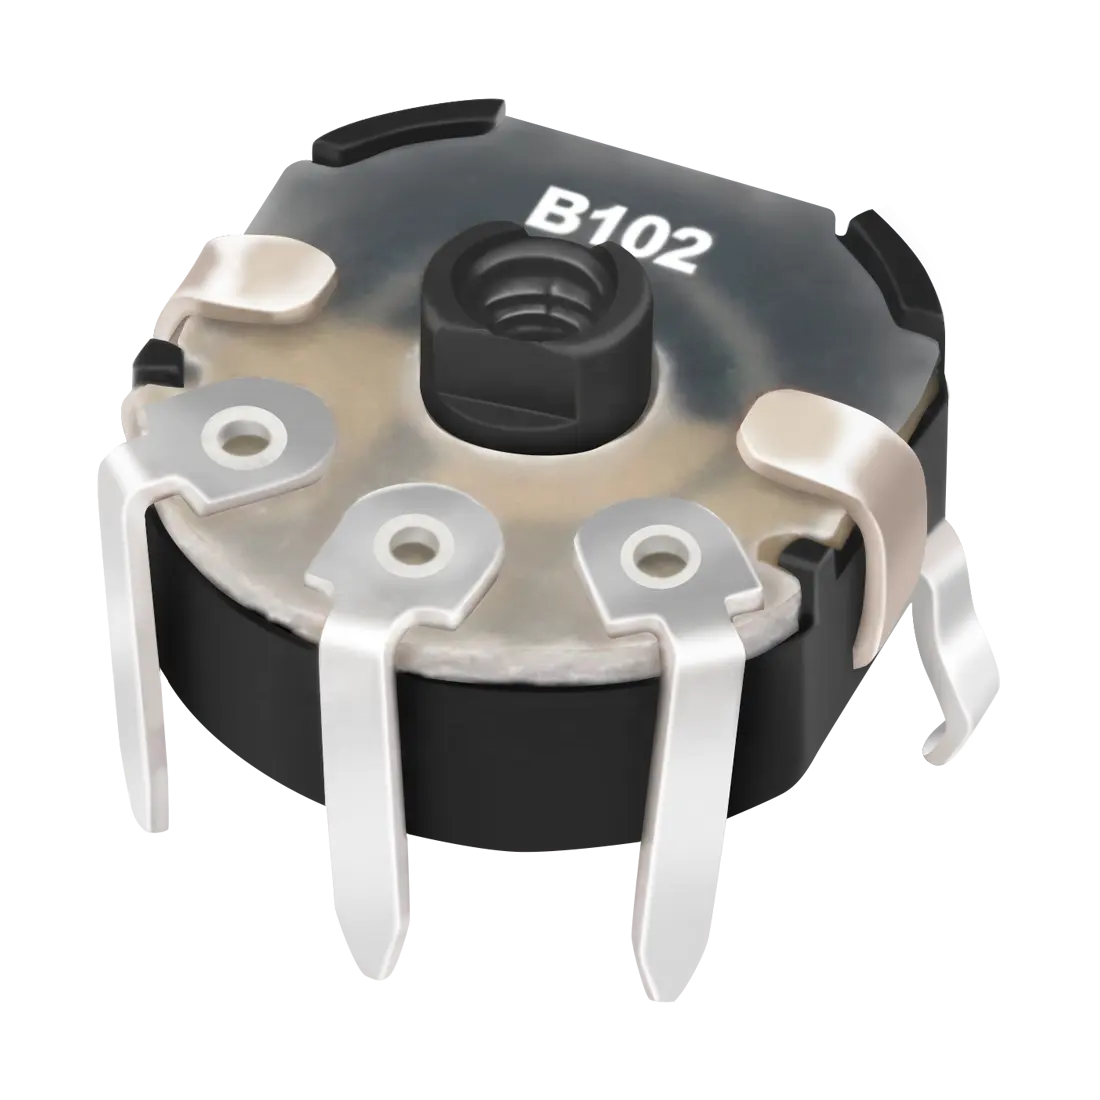 RC0805 Thumb-wheel Potentiometer